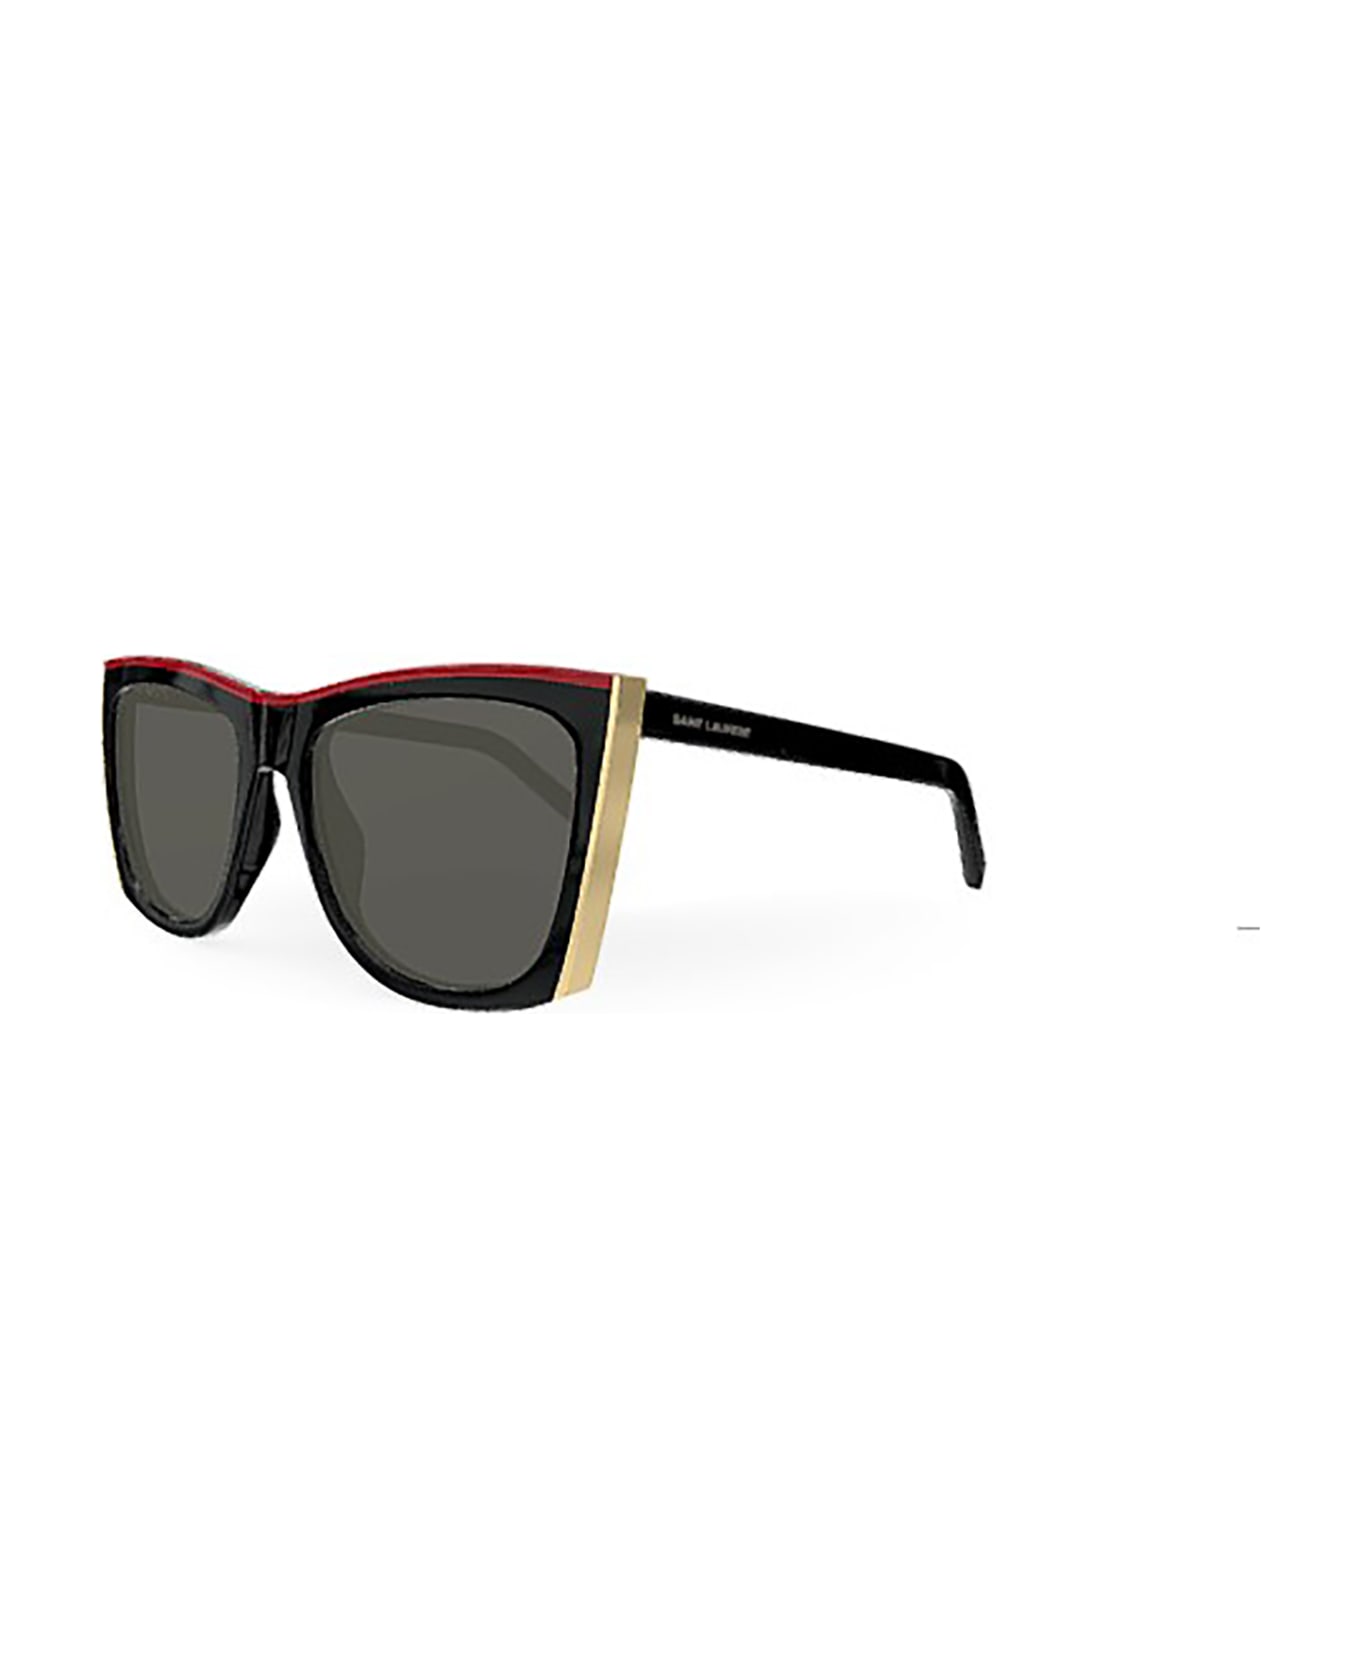 Saint Laurent Eyewear SL 539 PALOMA Sunglasses - buy robert wood polarized classic hexagon sunglasses